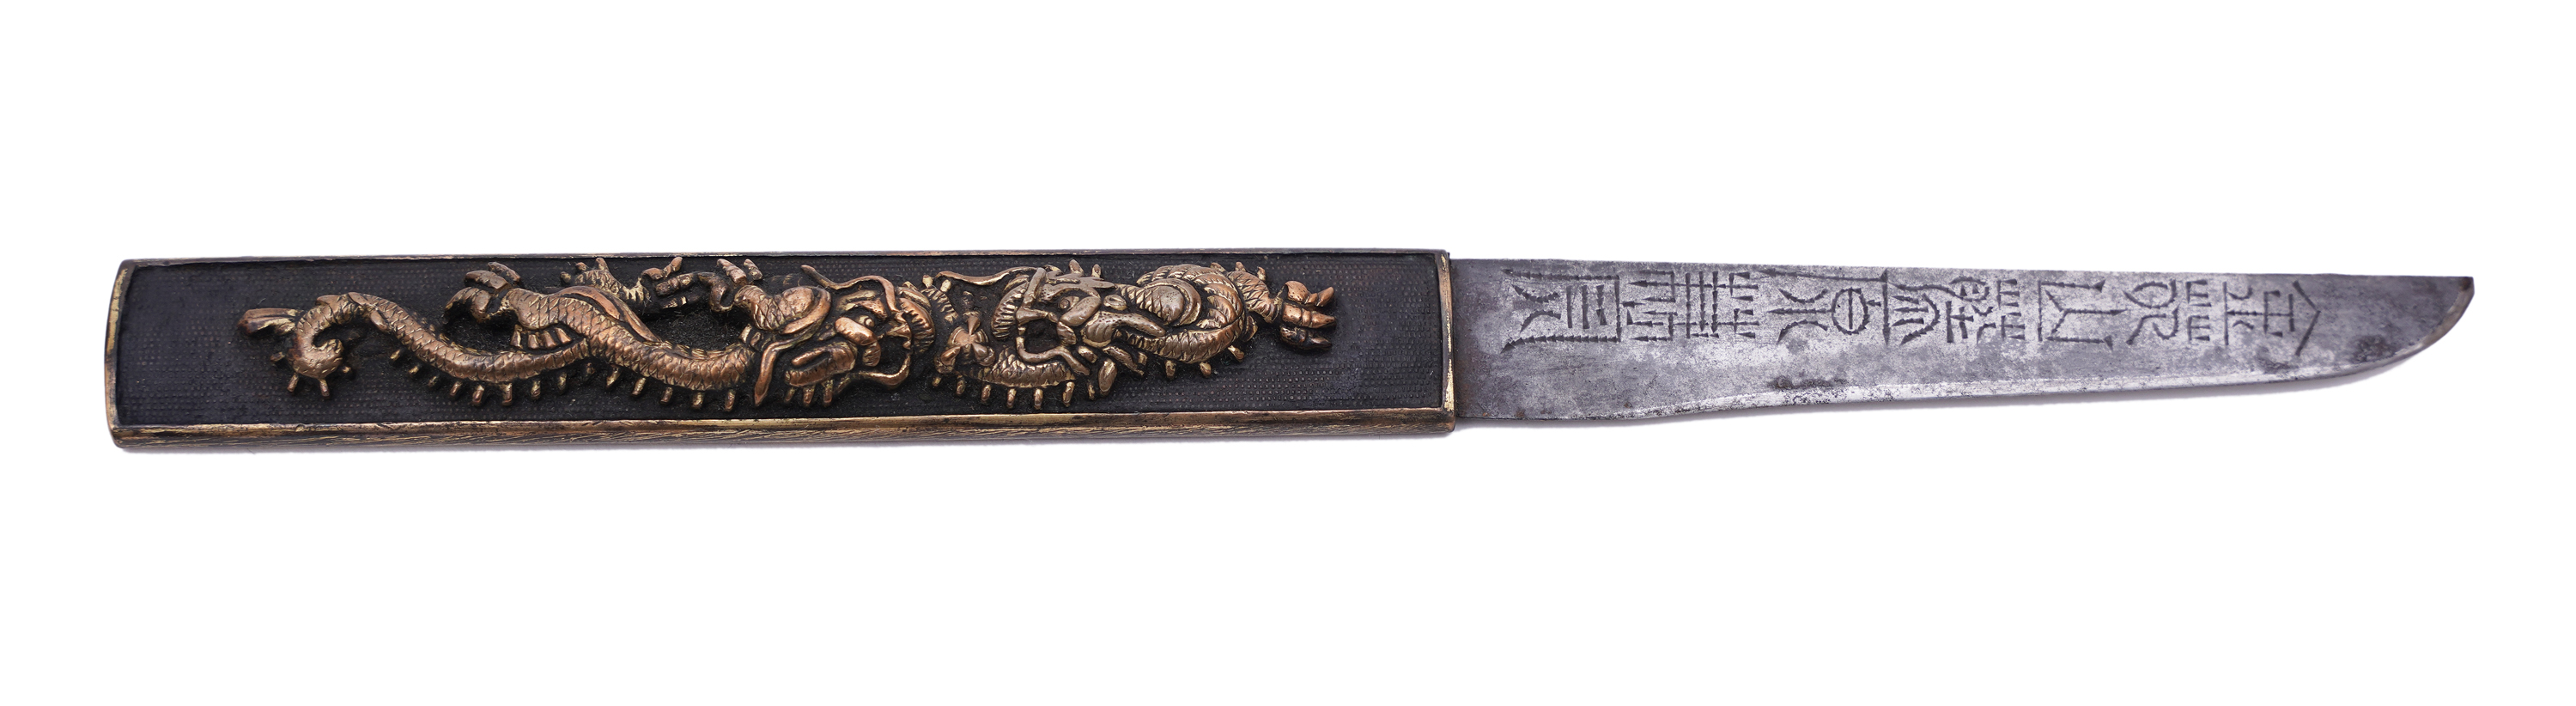 .A PAIR OF SAMURAI SWORDS, DAISHO Japan 1. Description of the katana: The katana is Shinto according - Image 14 of 24